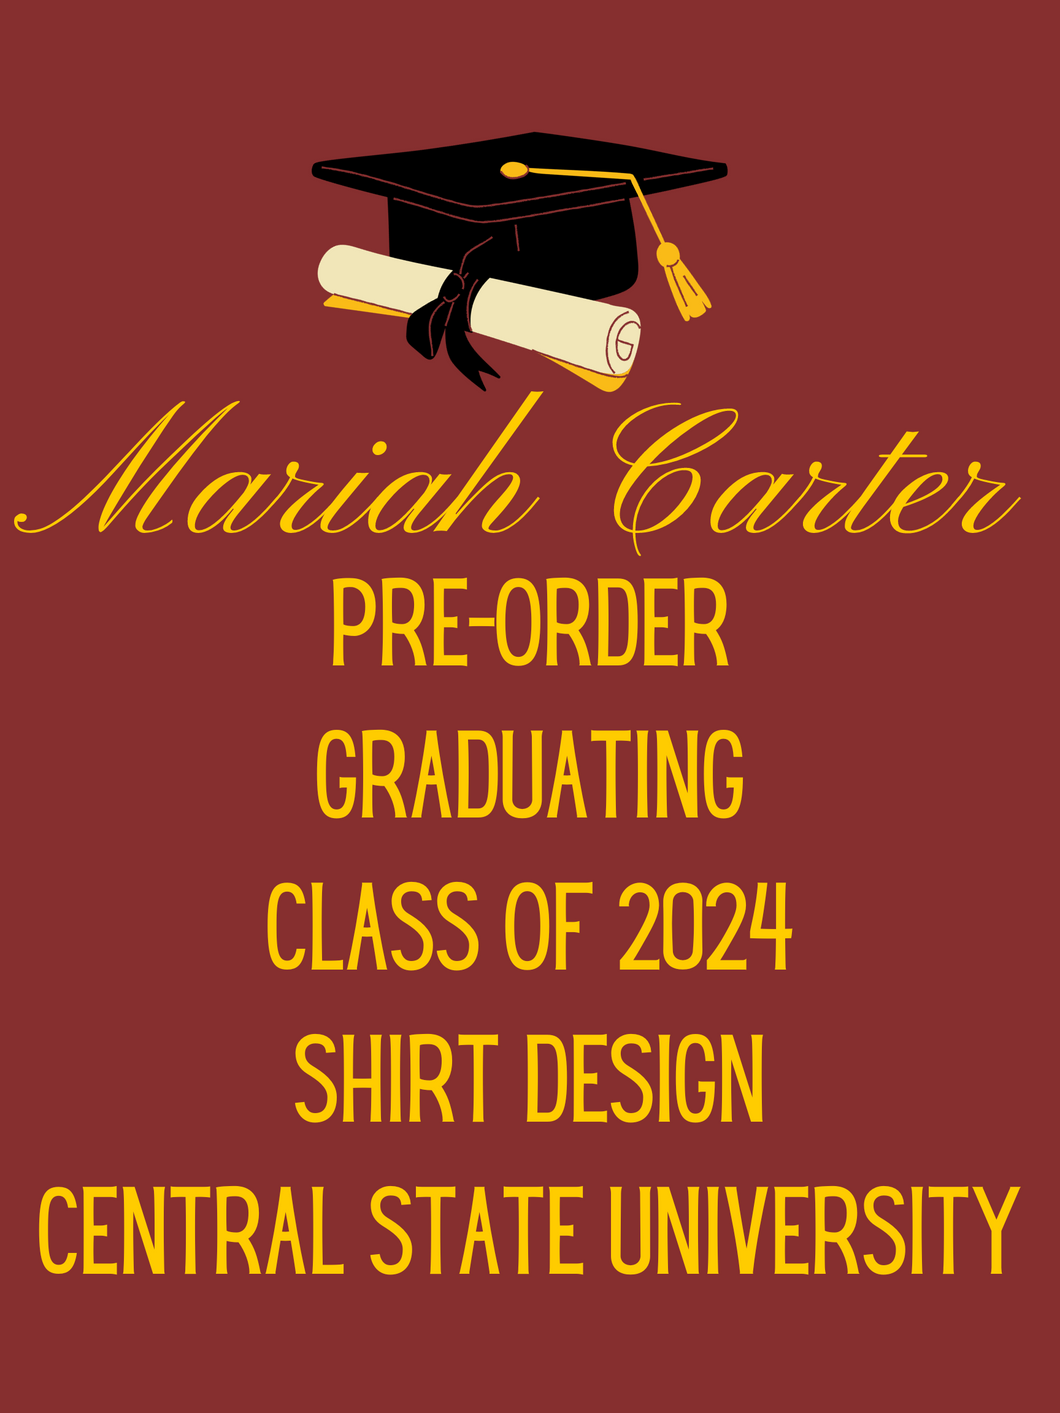 MARIAH'S PRE-ORDER CLASS OF 2024